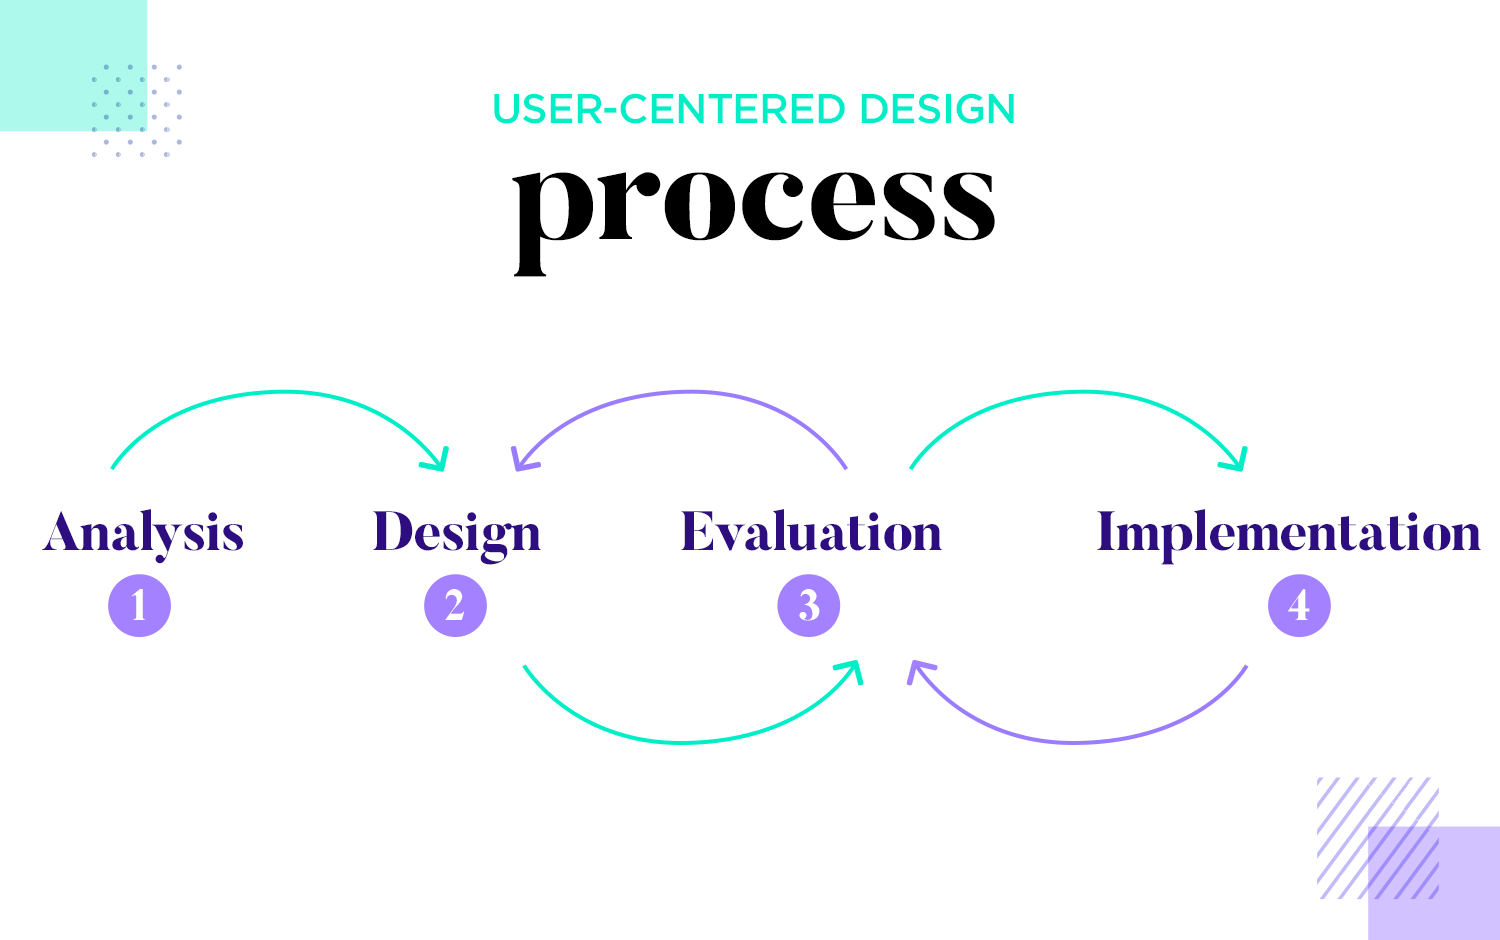 User flows - design focused on the user